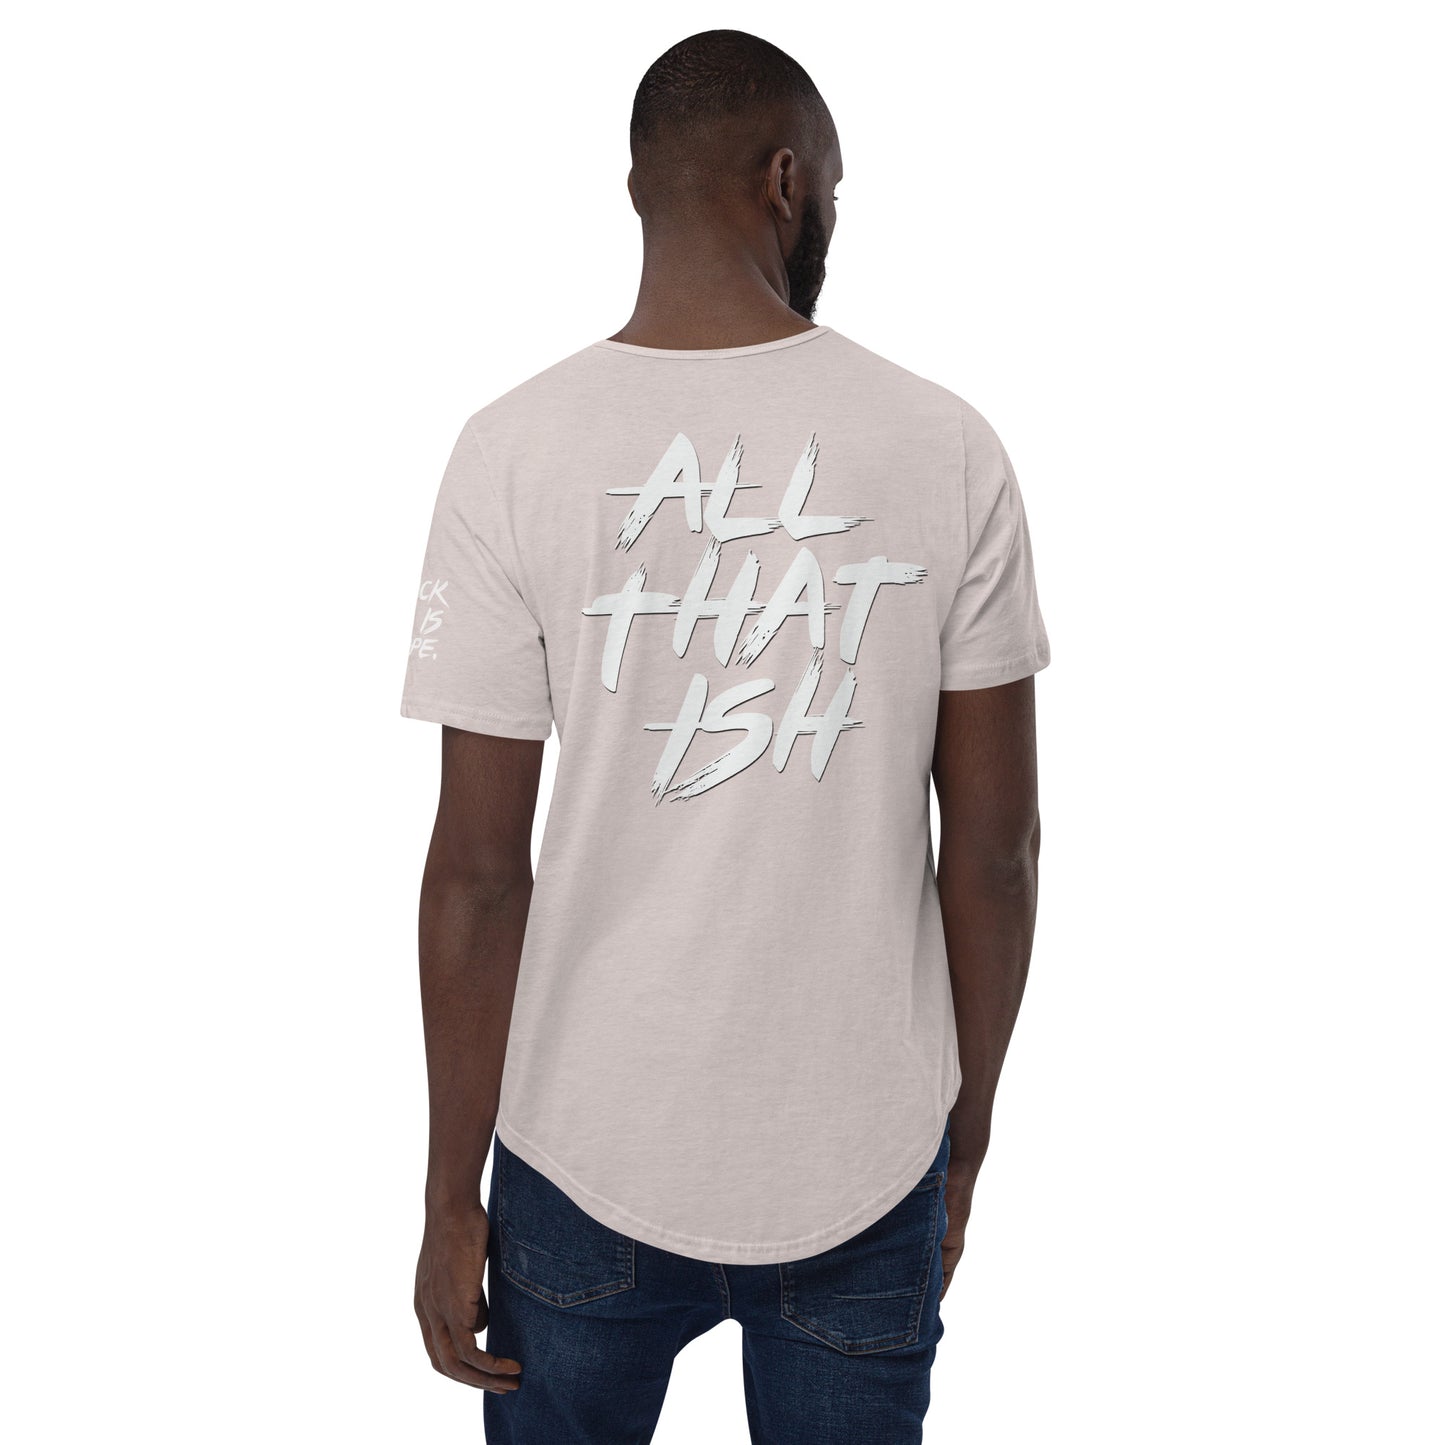 All That Ish University T-Shirt